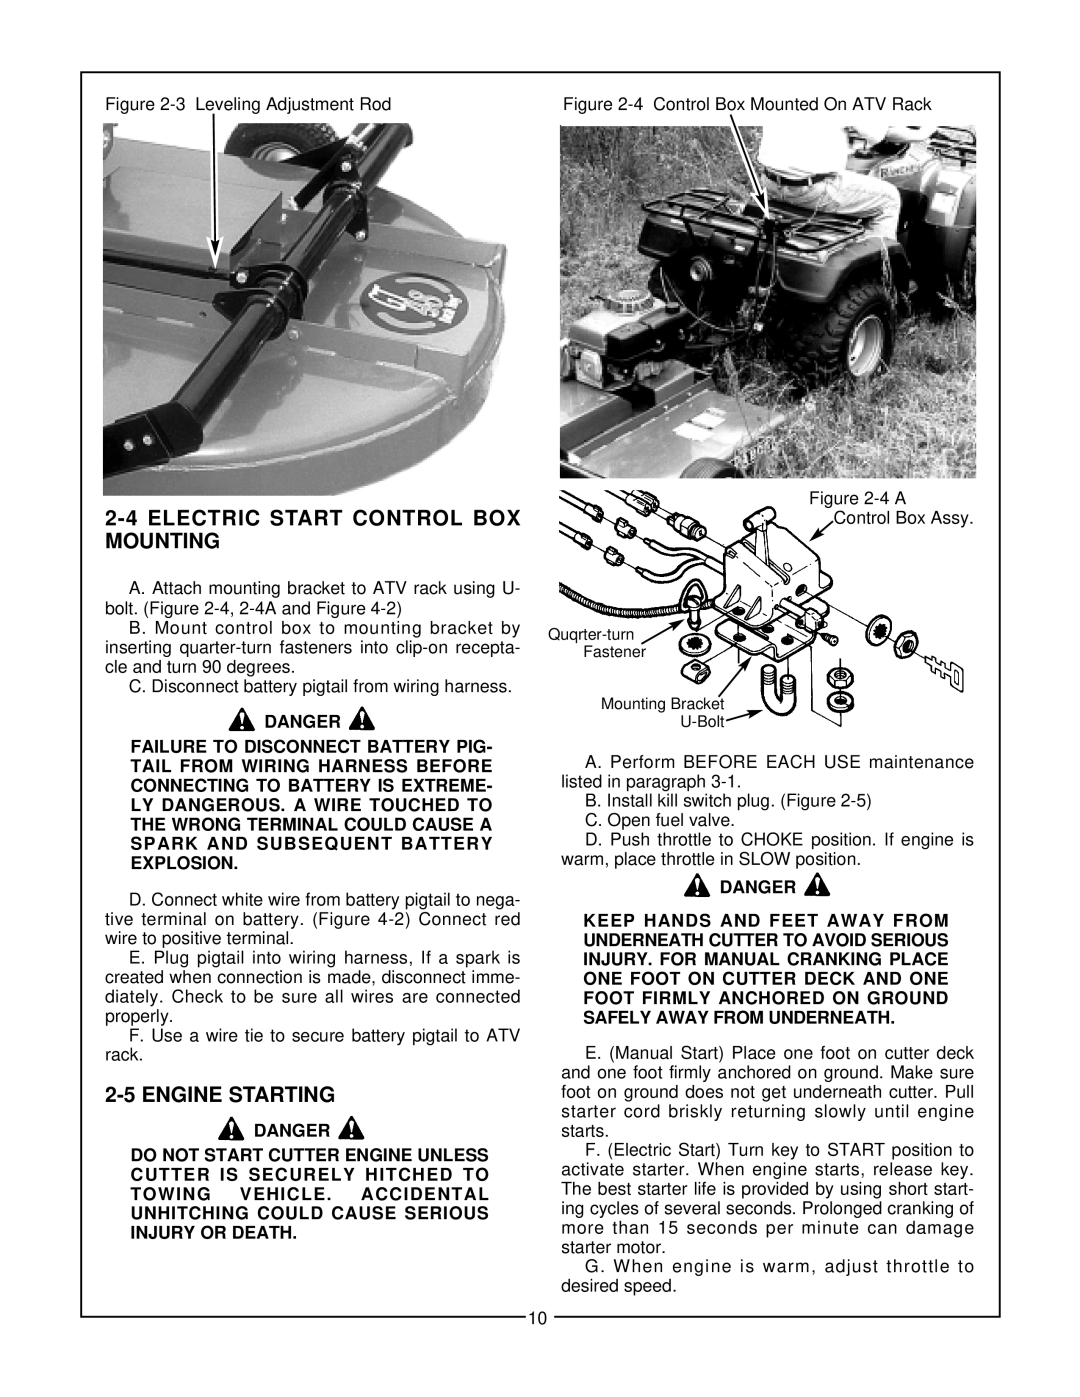 Bush Hog GT 48 manual Electric Start Control Box Mounting, Engine Starting, Danger 